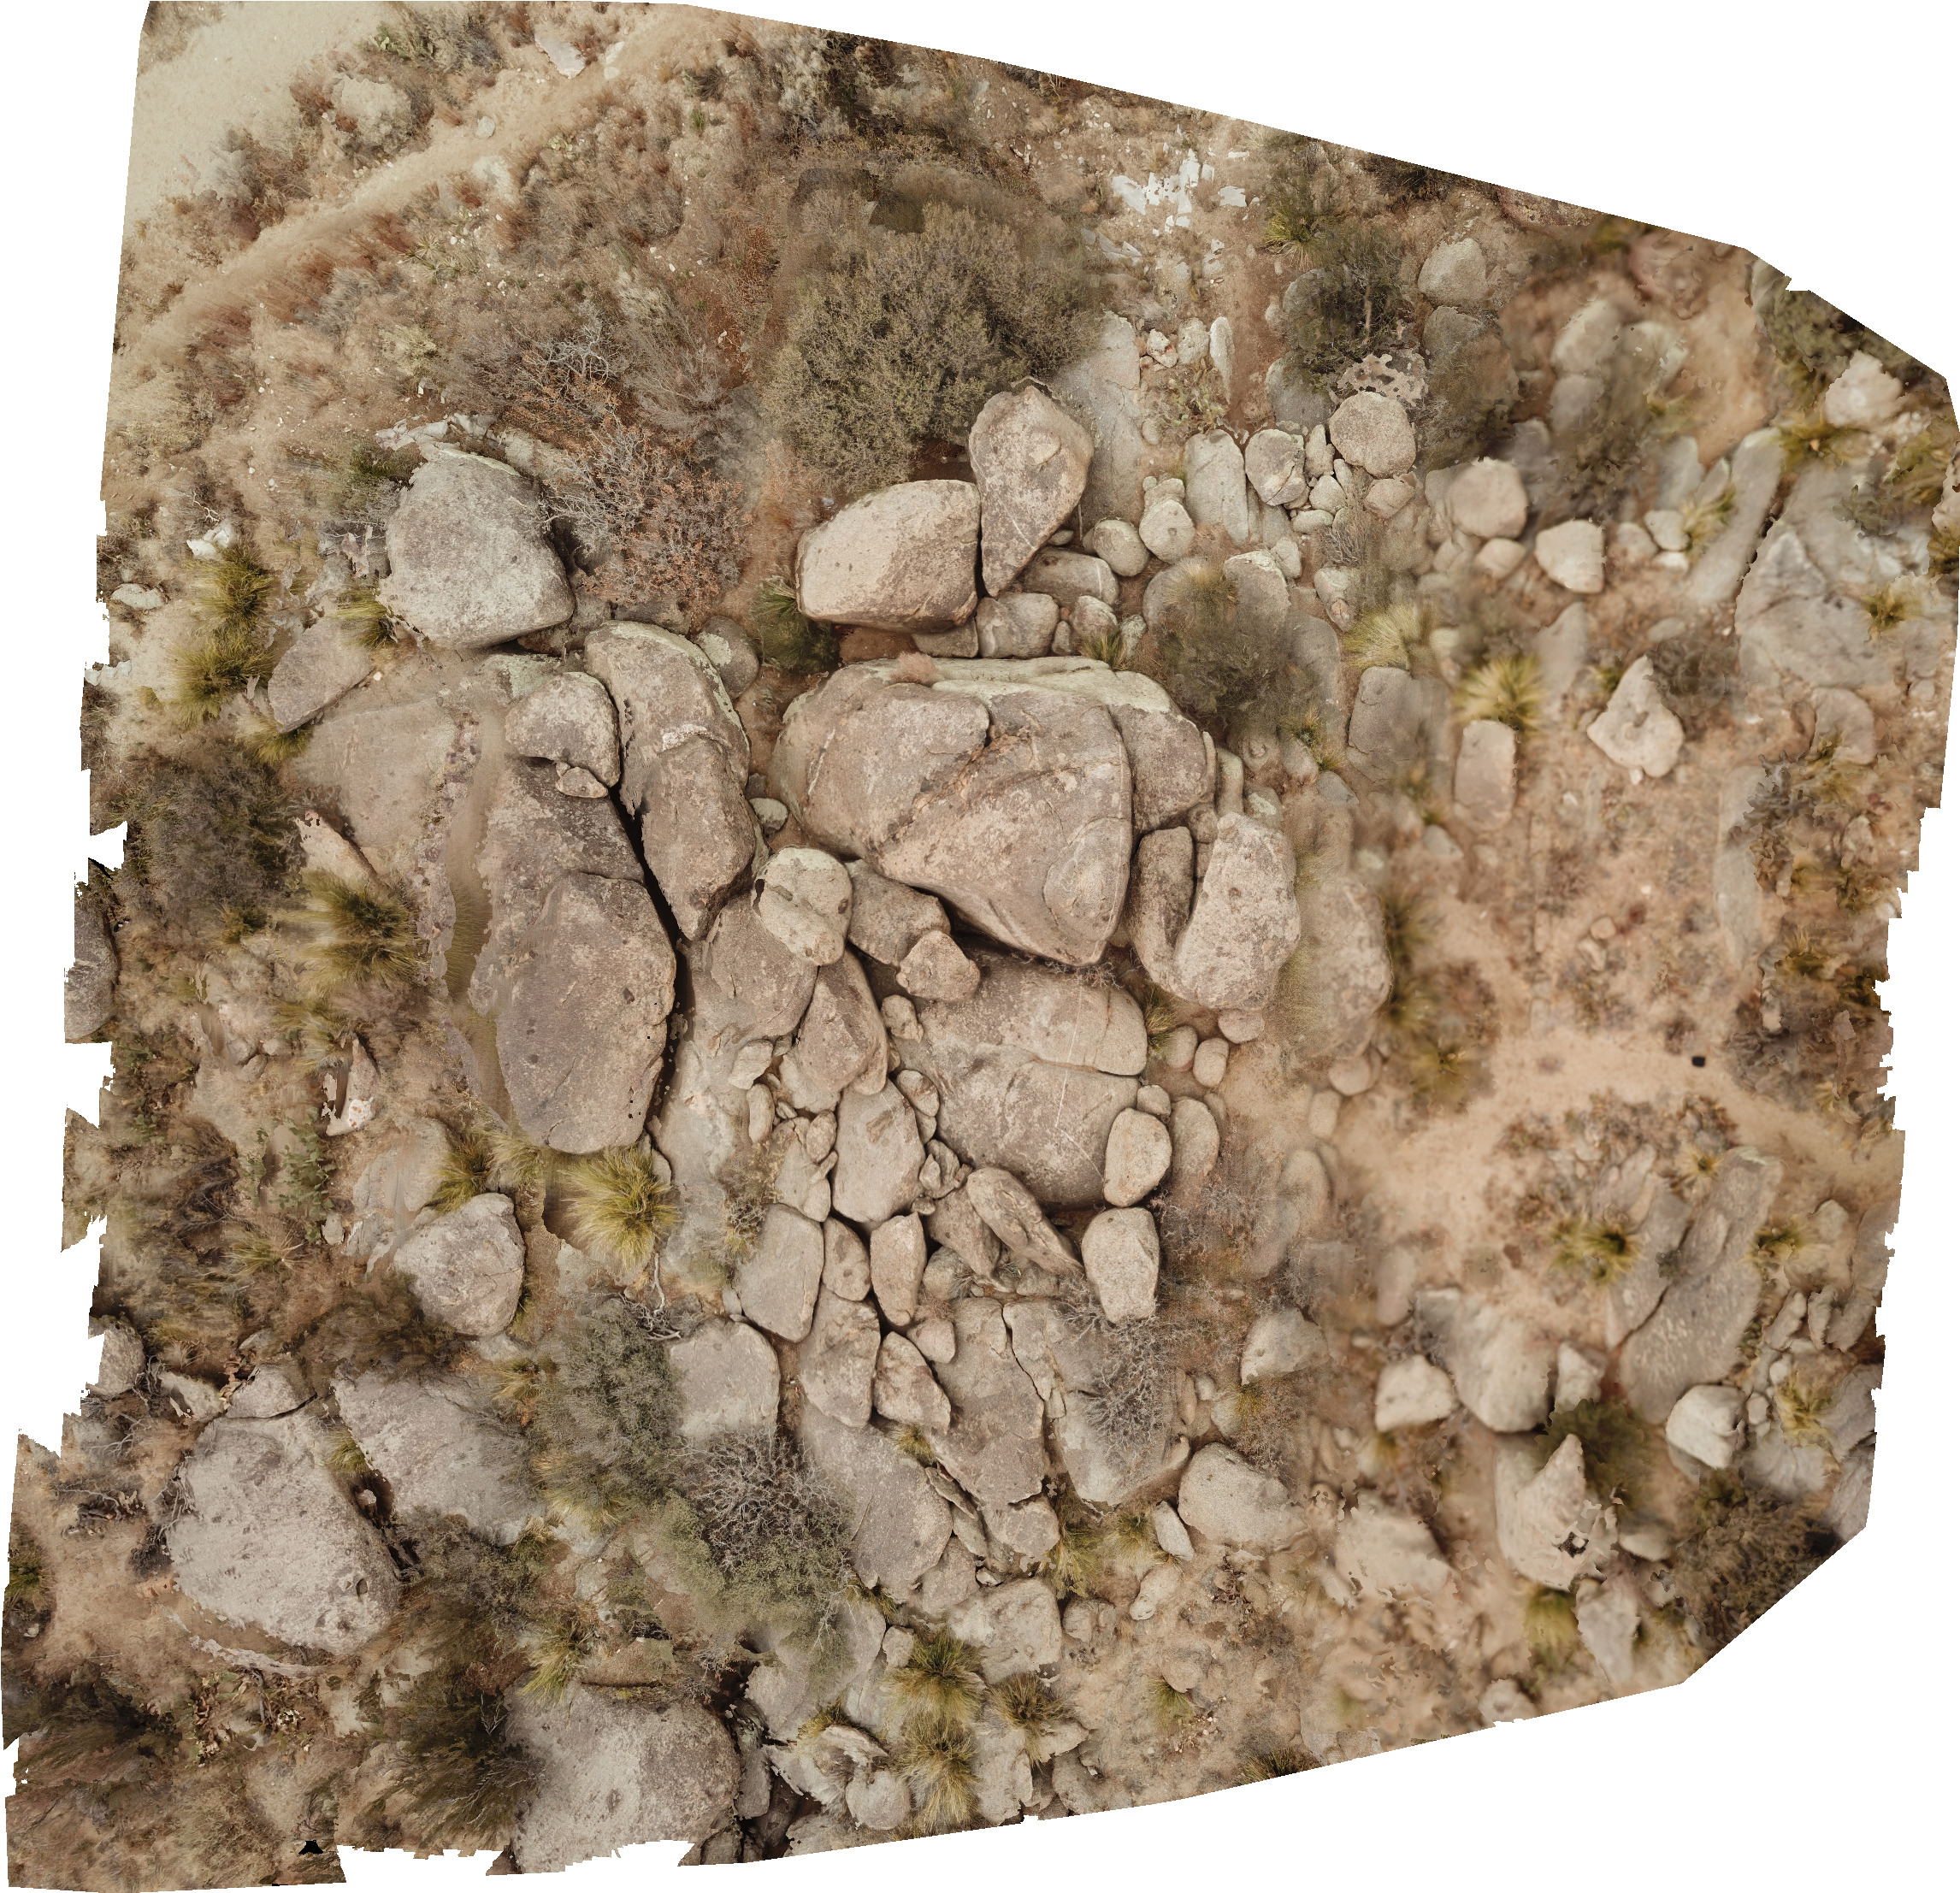 Orthomosaic of large granite rocks.